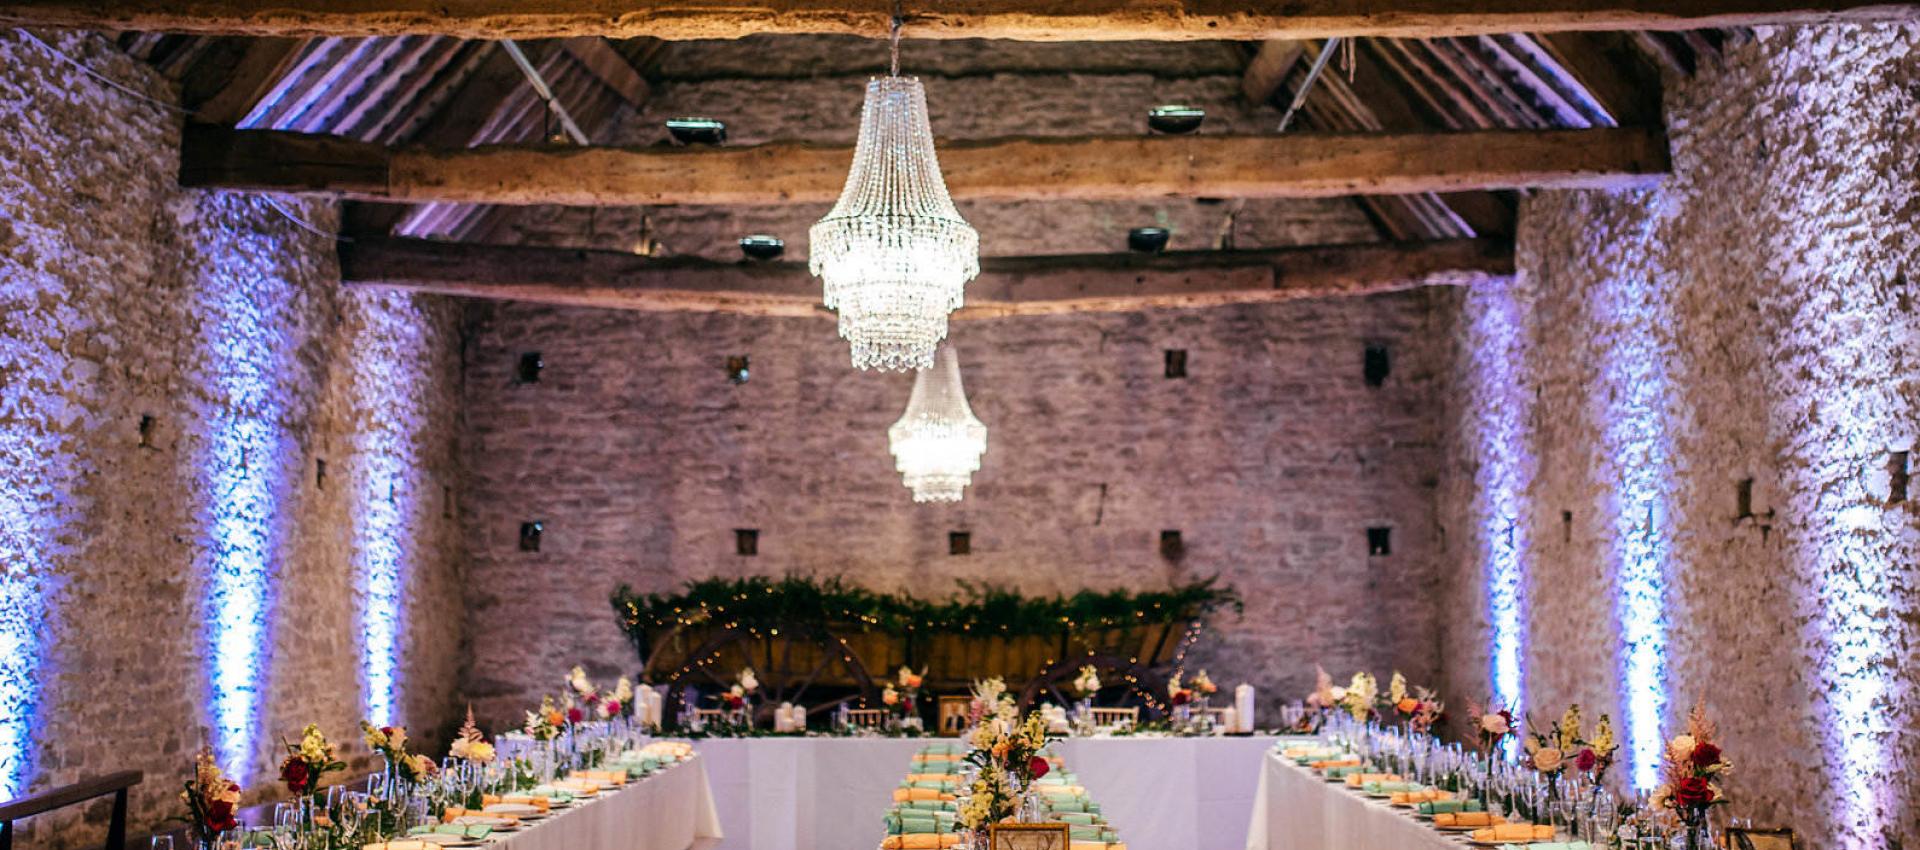 Cogges barn as wedding venue